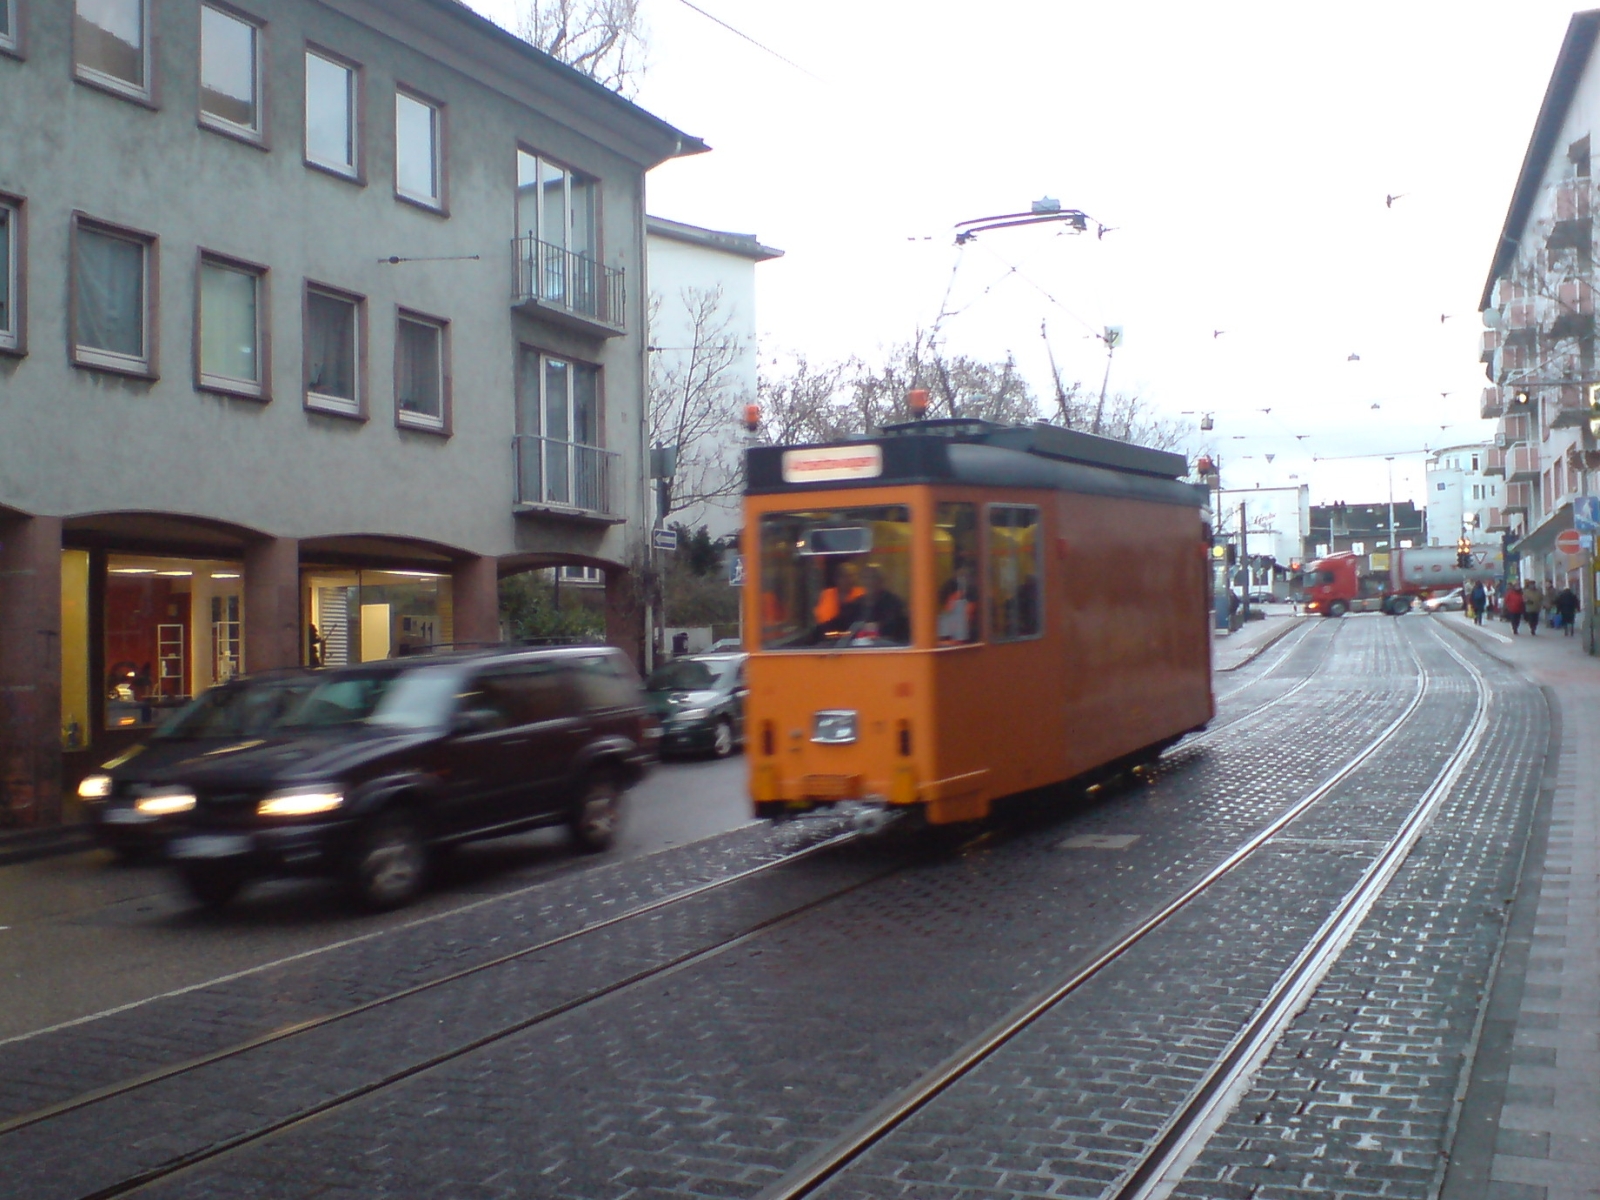 File:Tram Service Vehicle In Darmstadt.jpg - Wikimedia Commons